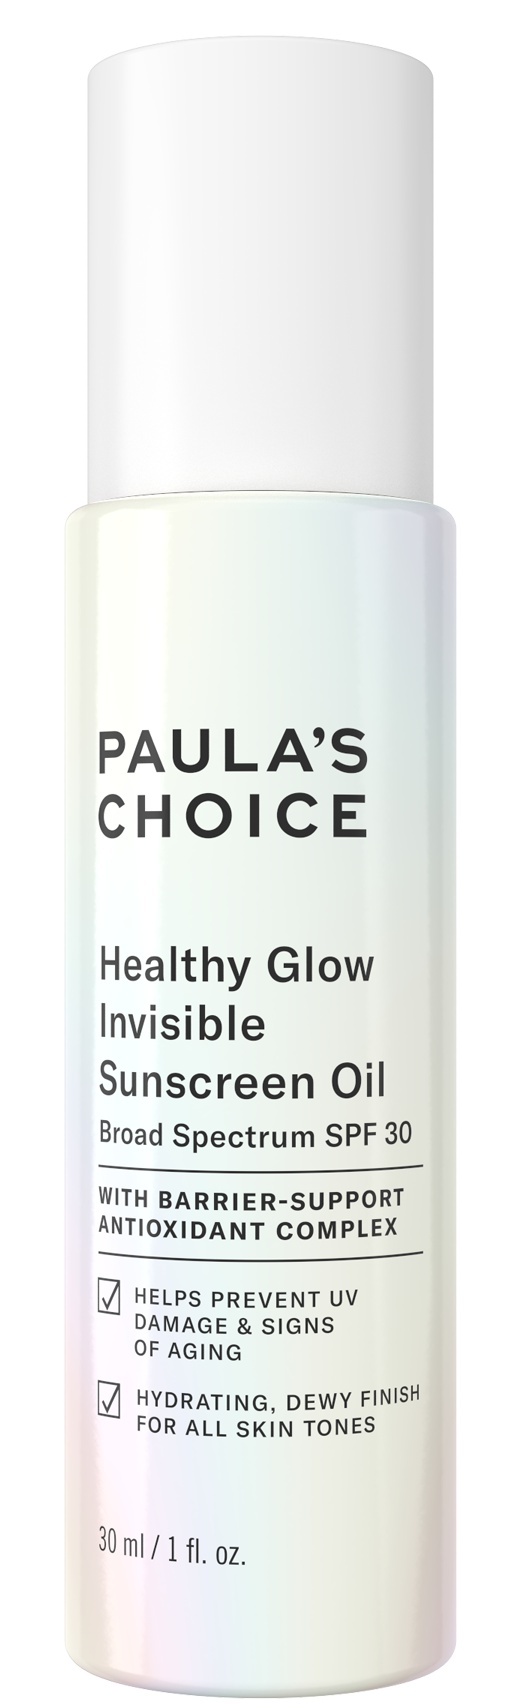 Paula's Choice Healthy Glow Invisible Sunscreen Oil SPF 30